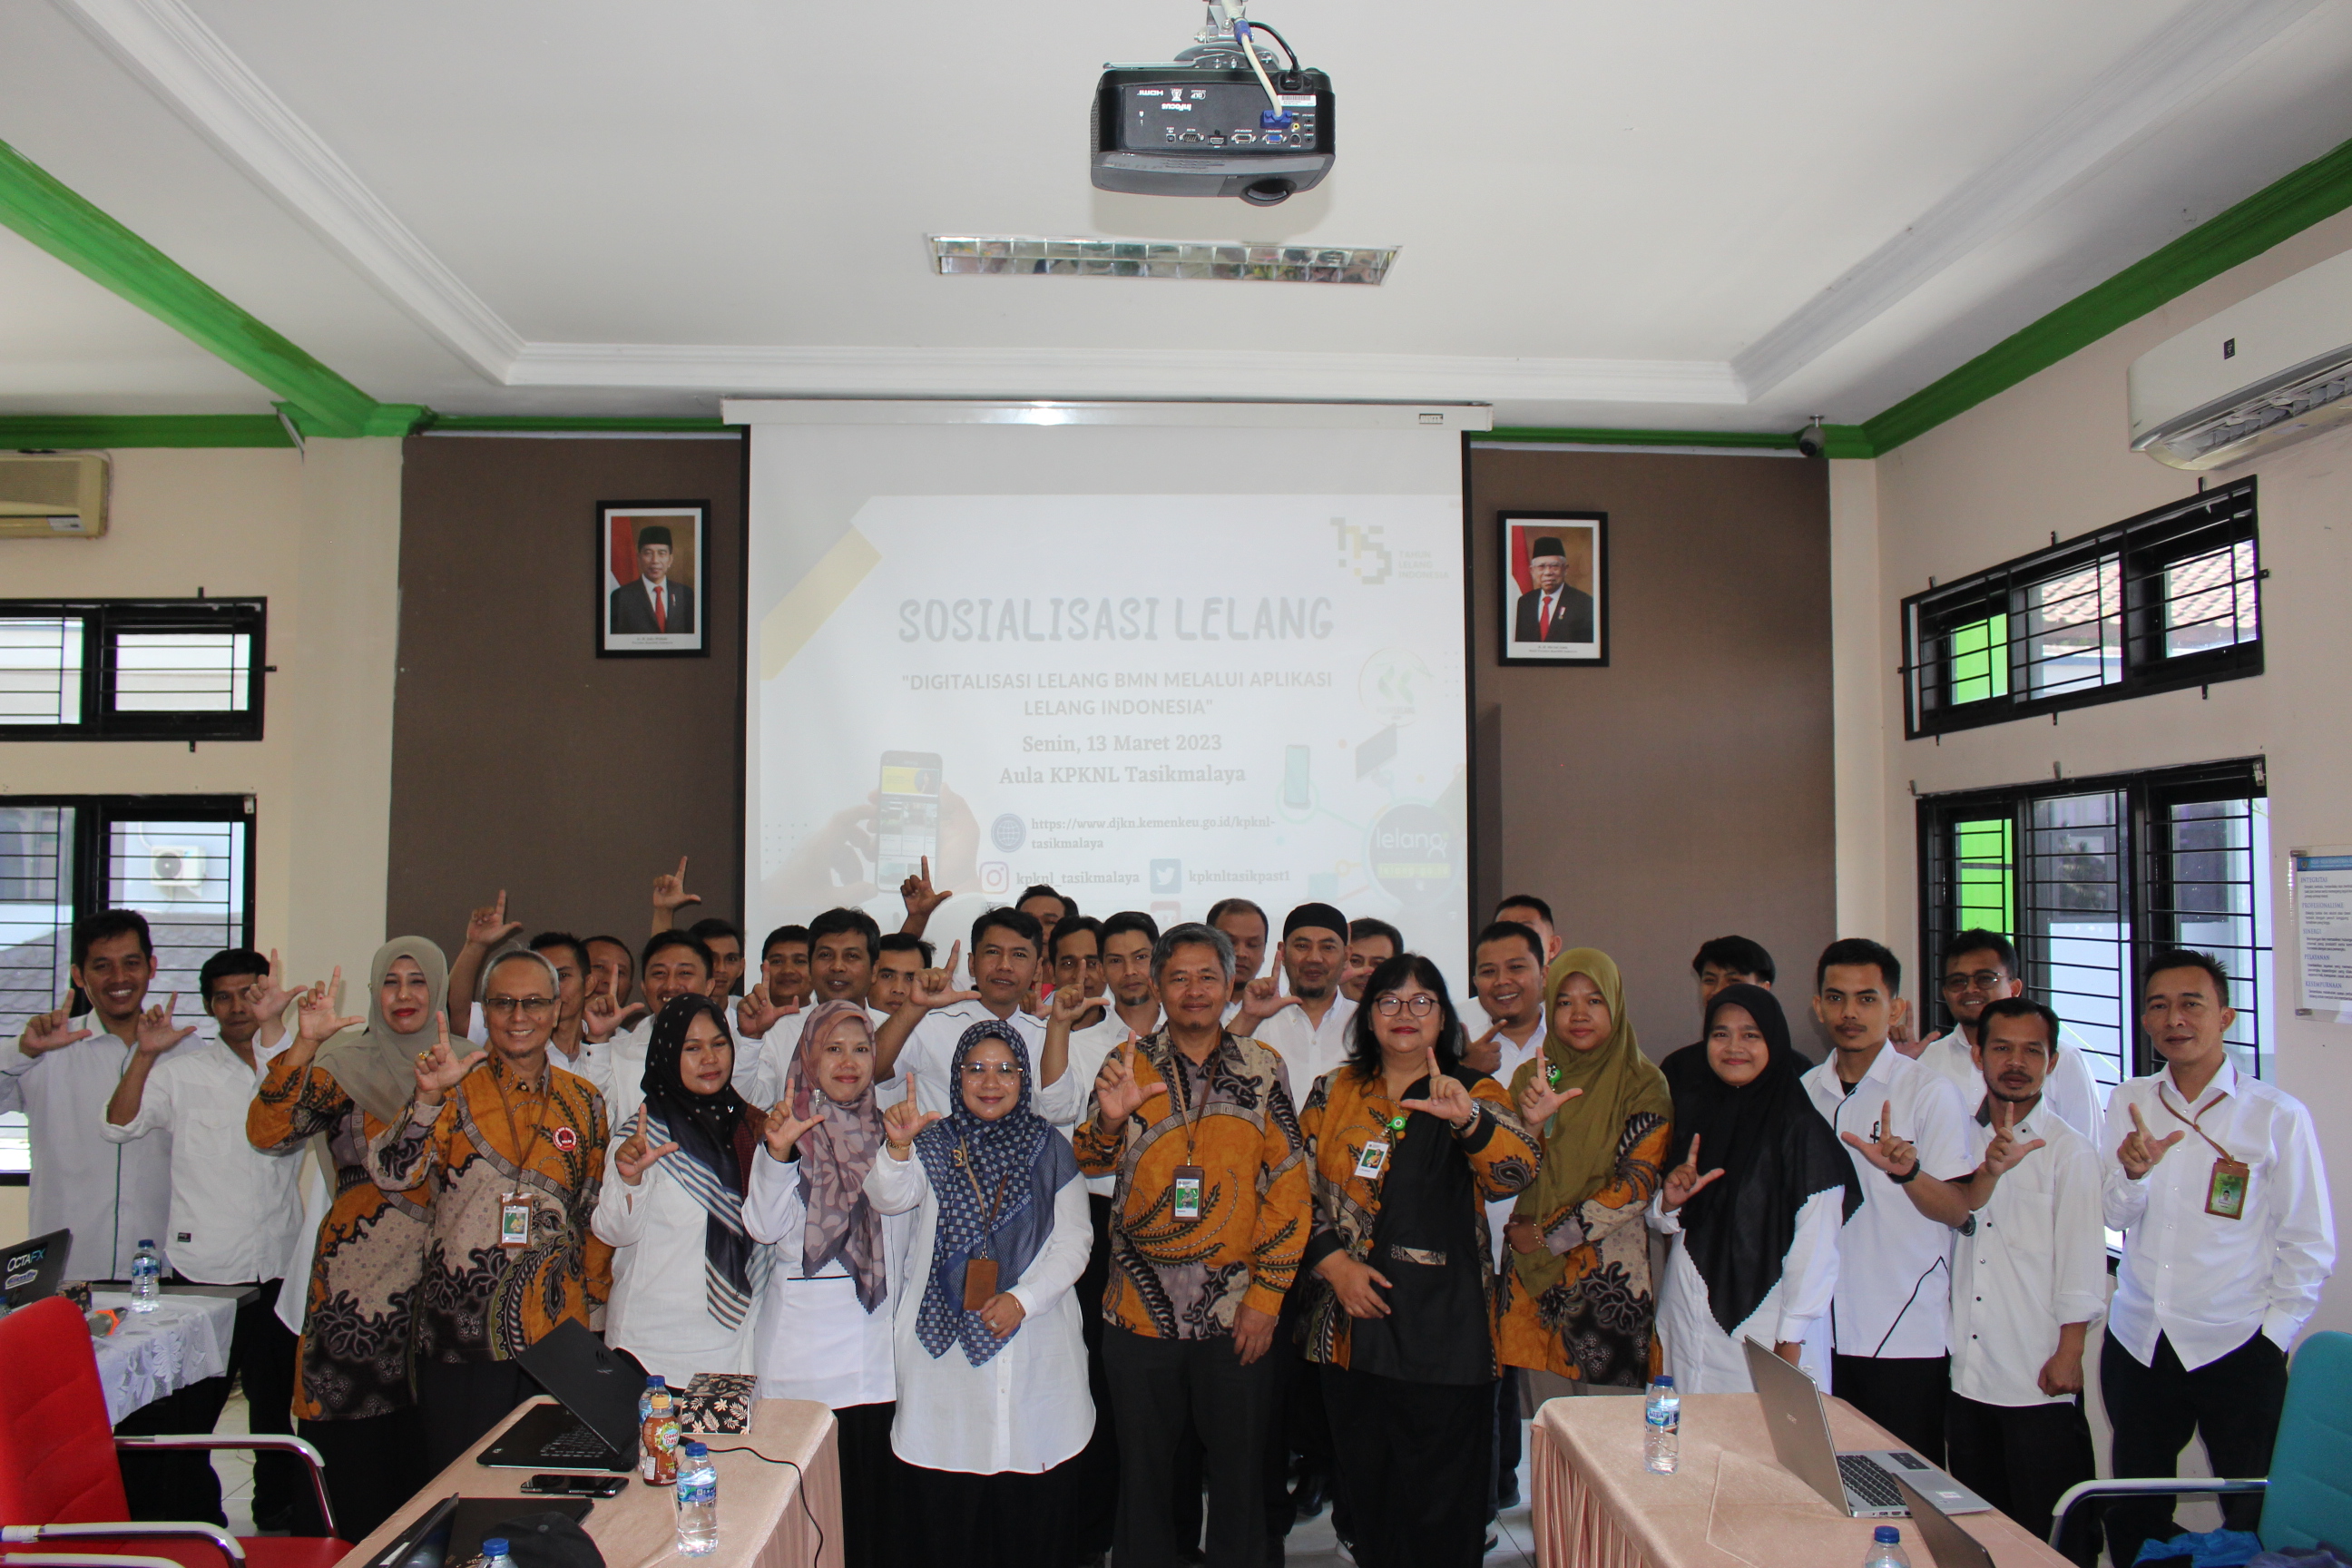 Sosialisasi "Digitalisasi Lelang BMN melalui Aplikasi Lelang Indonesia" di KPKNL Tasikmalaya